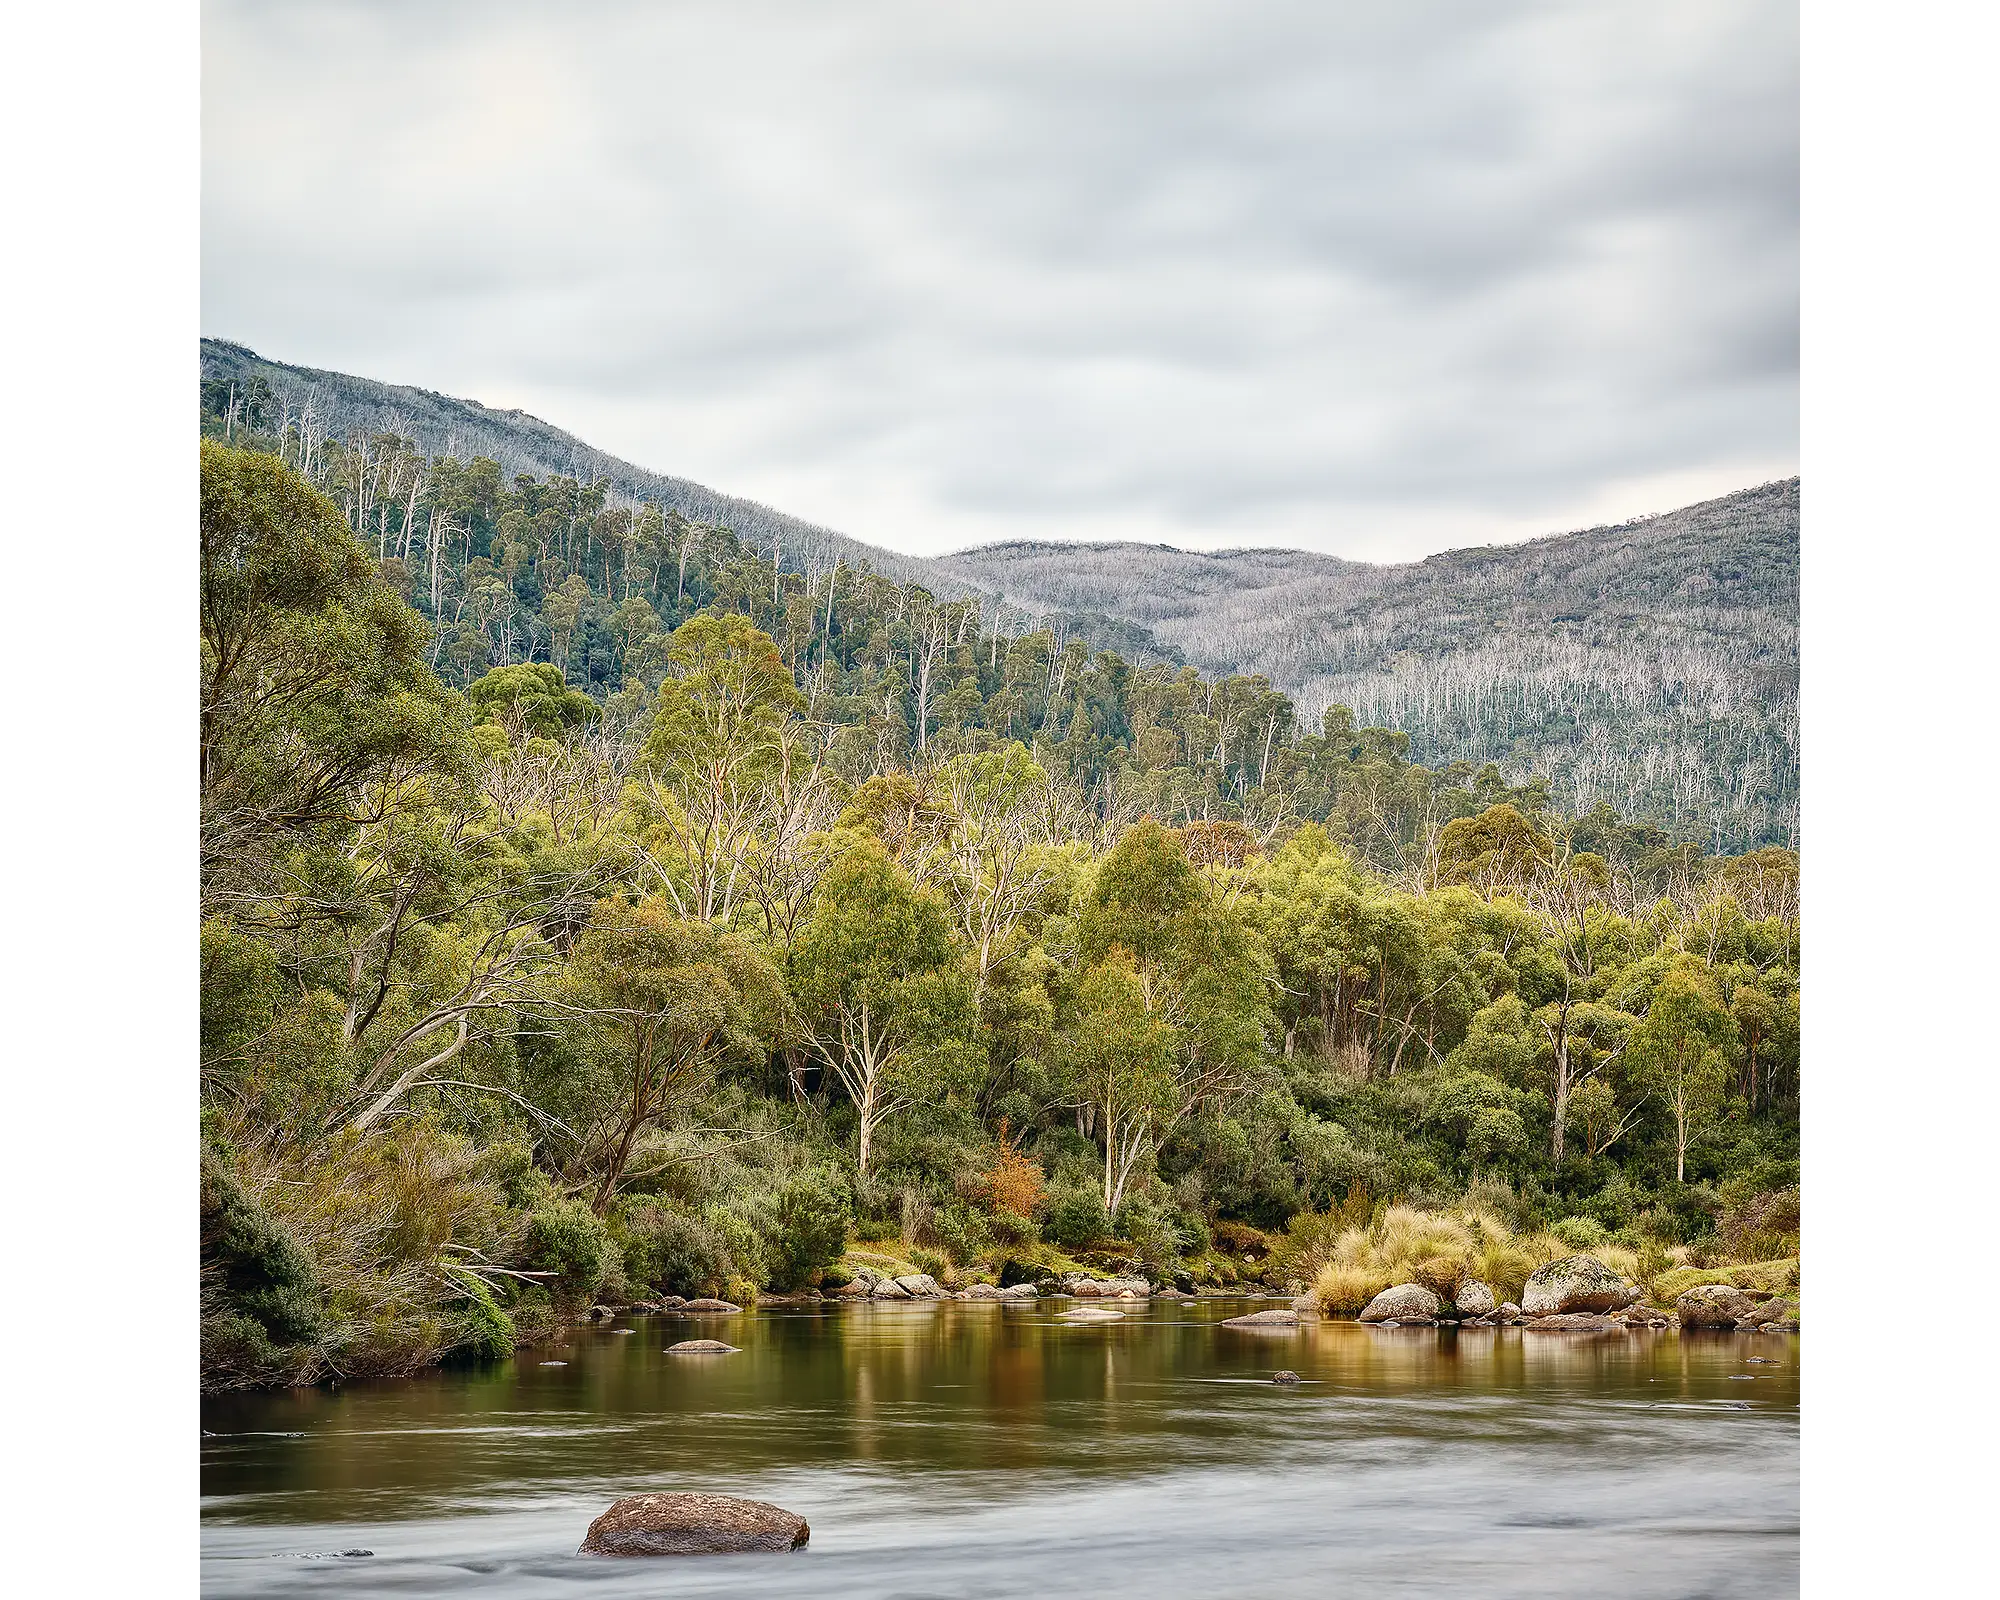 Sub-alpine forest surrounding the Thredbo River, Kosciuszko National Park, NSW. 